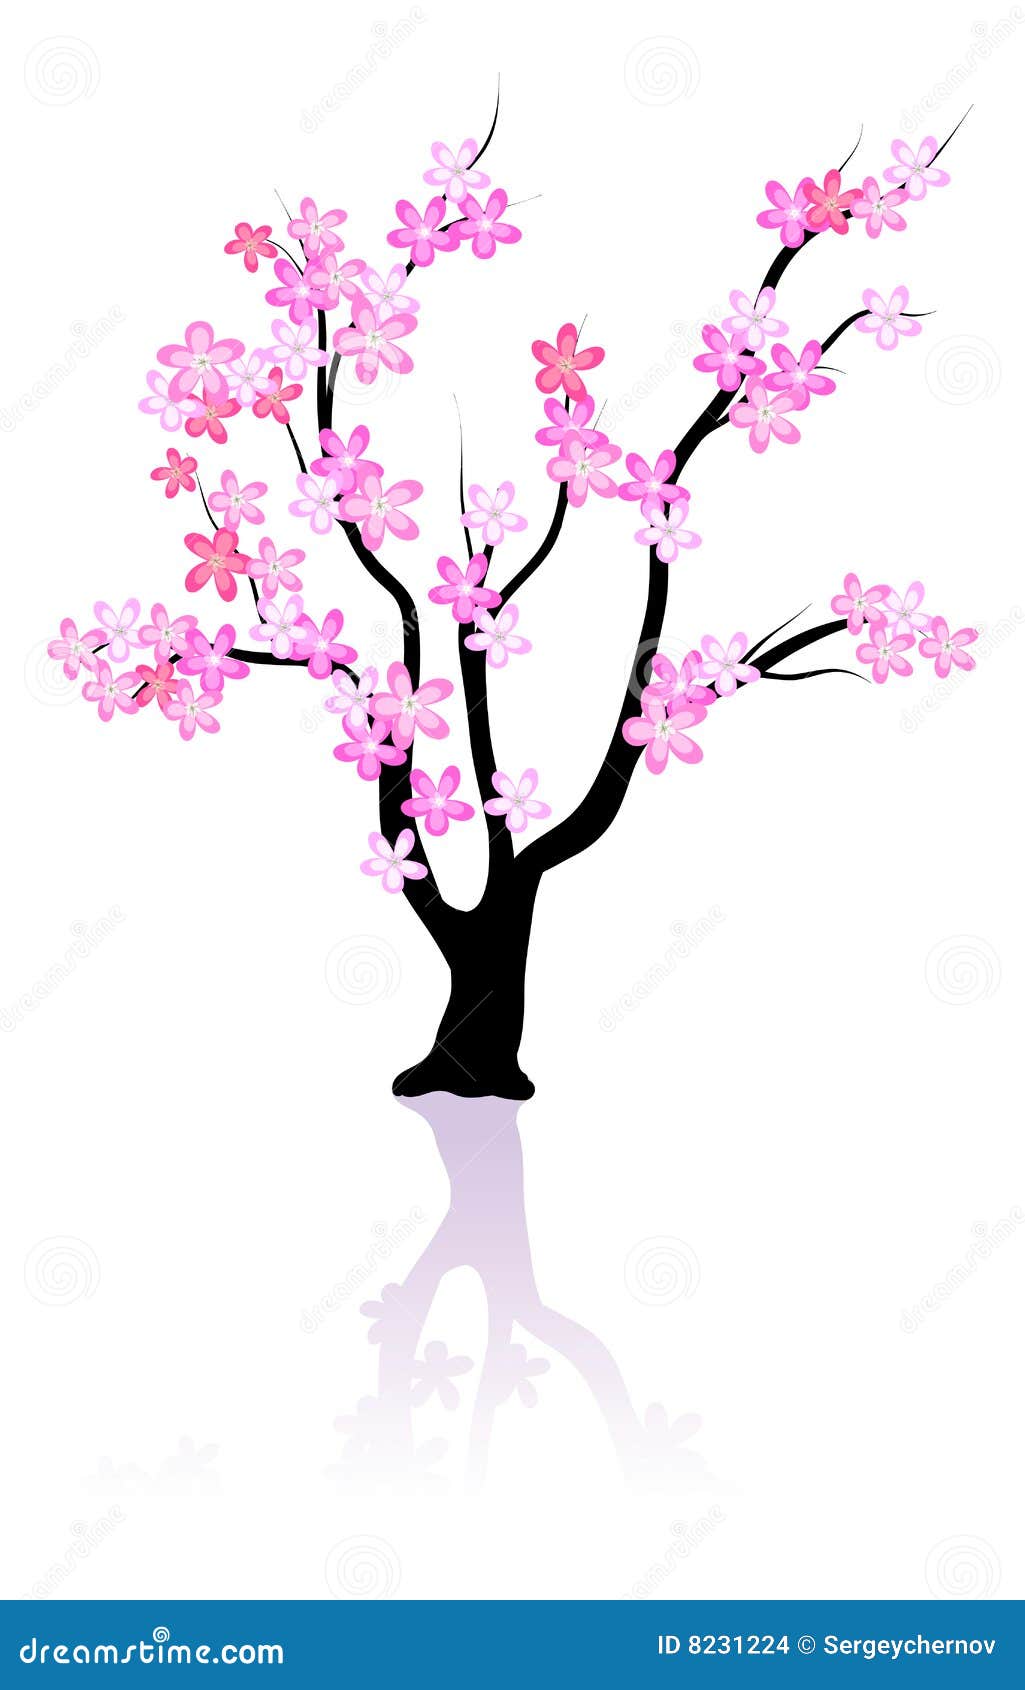 rosy flowers on tree